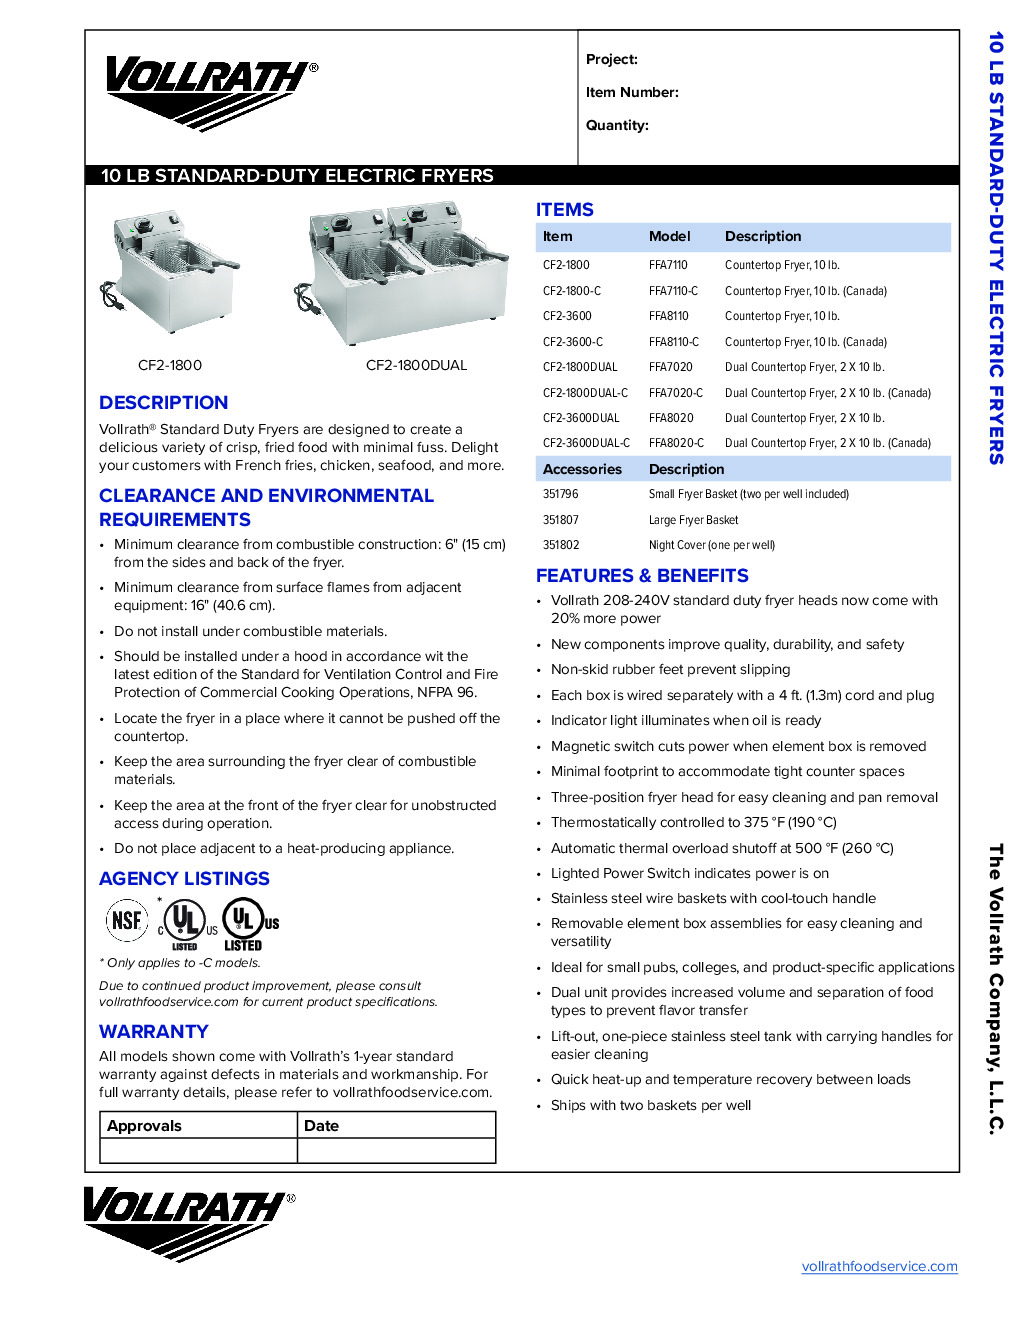 Vollrath CF2-3600DUAL Split Pot Countertop Electric Fryer w/ 4 Small Baskets, 20-Lb. Capacity